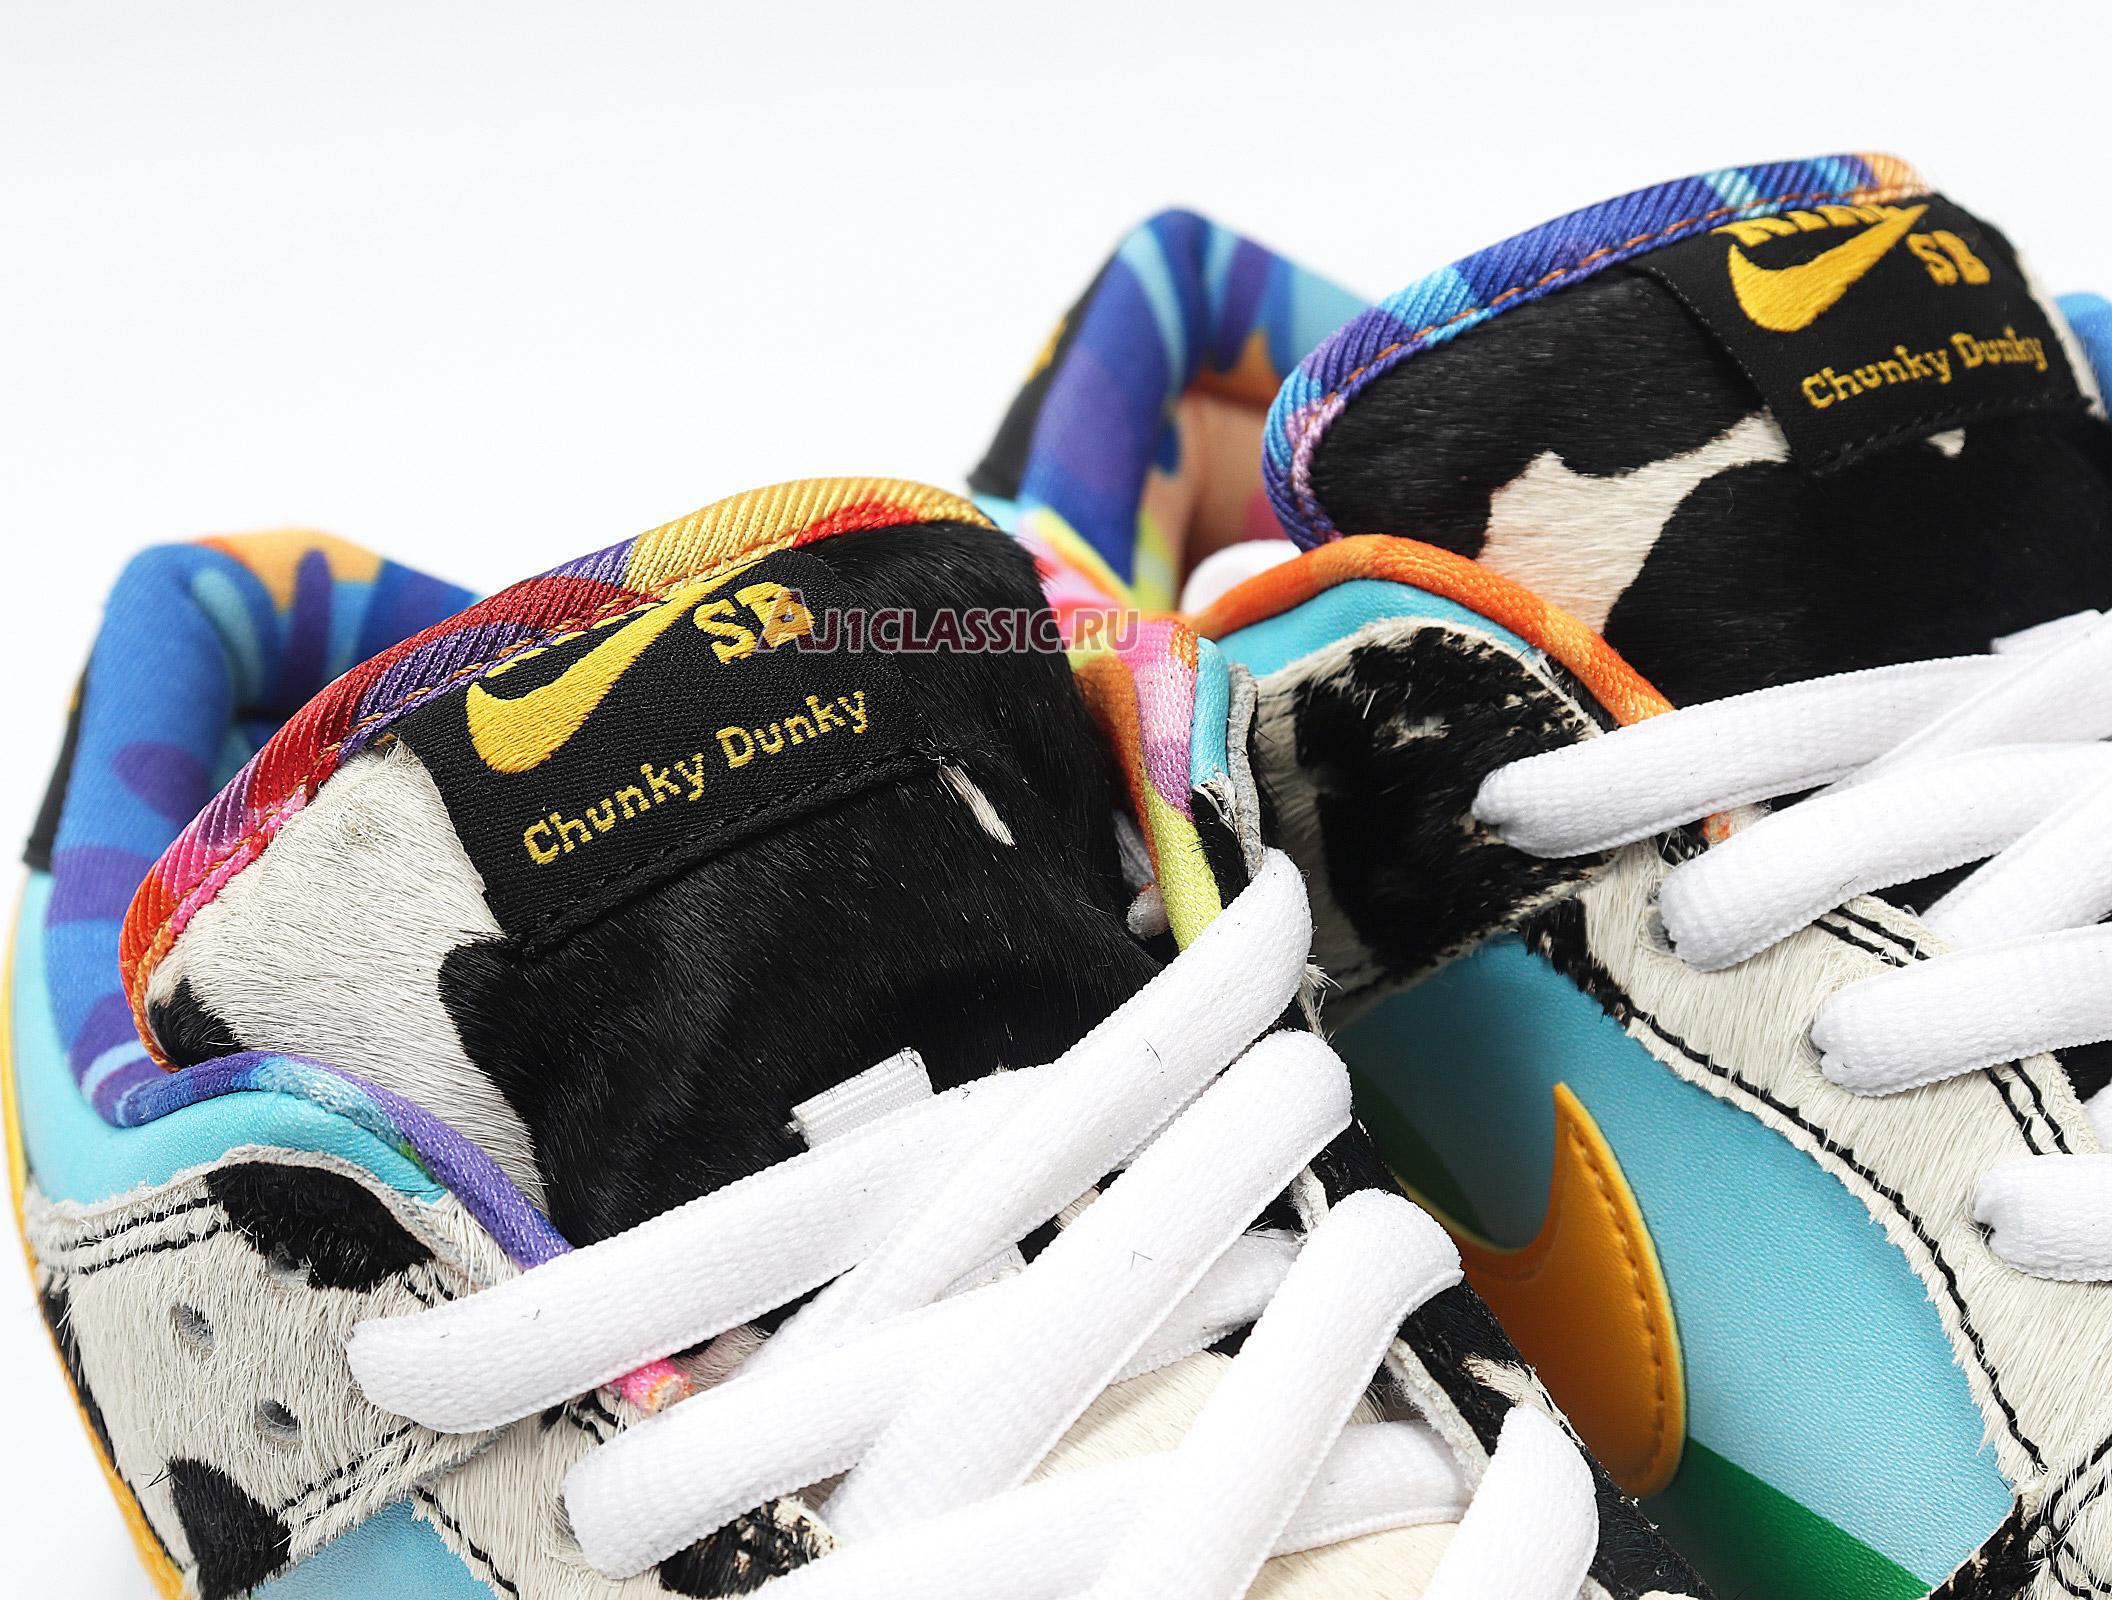 Nike Ben Jerrys x Dunk Low SB "Chunky Dunky" CU3244-100